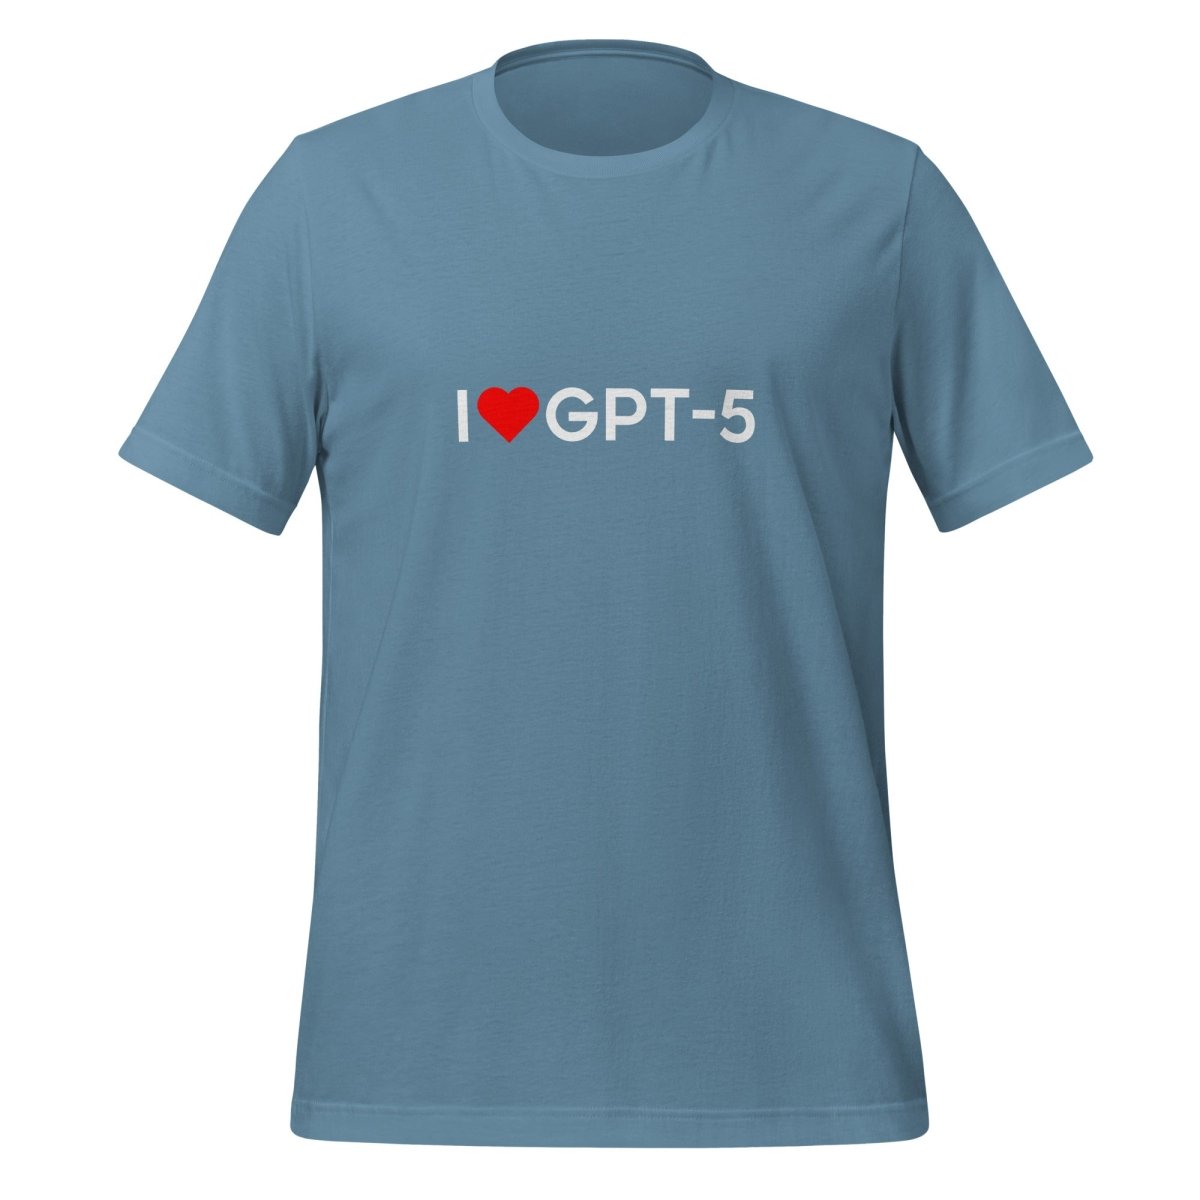 I Heart GPT - 5 T - Shirt (unisex) - Steel Blue - AI Store